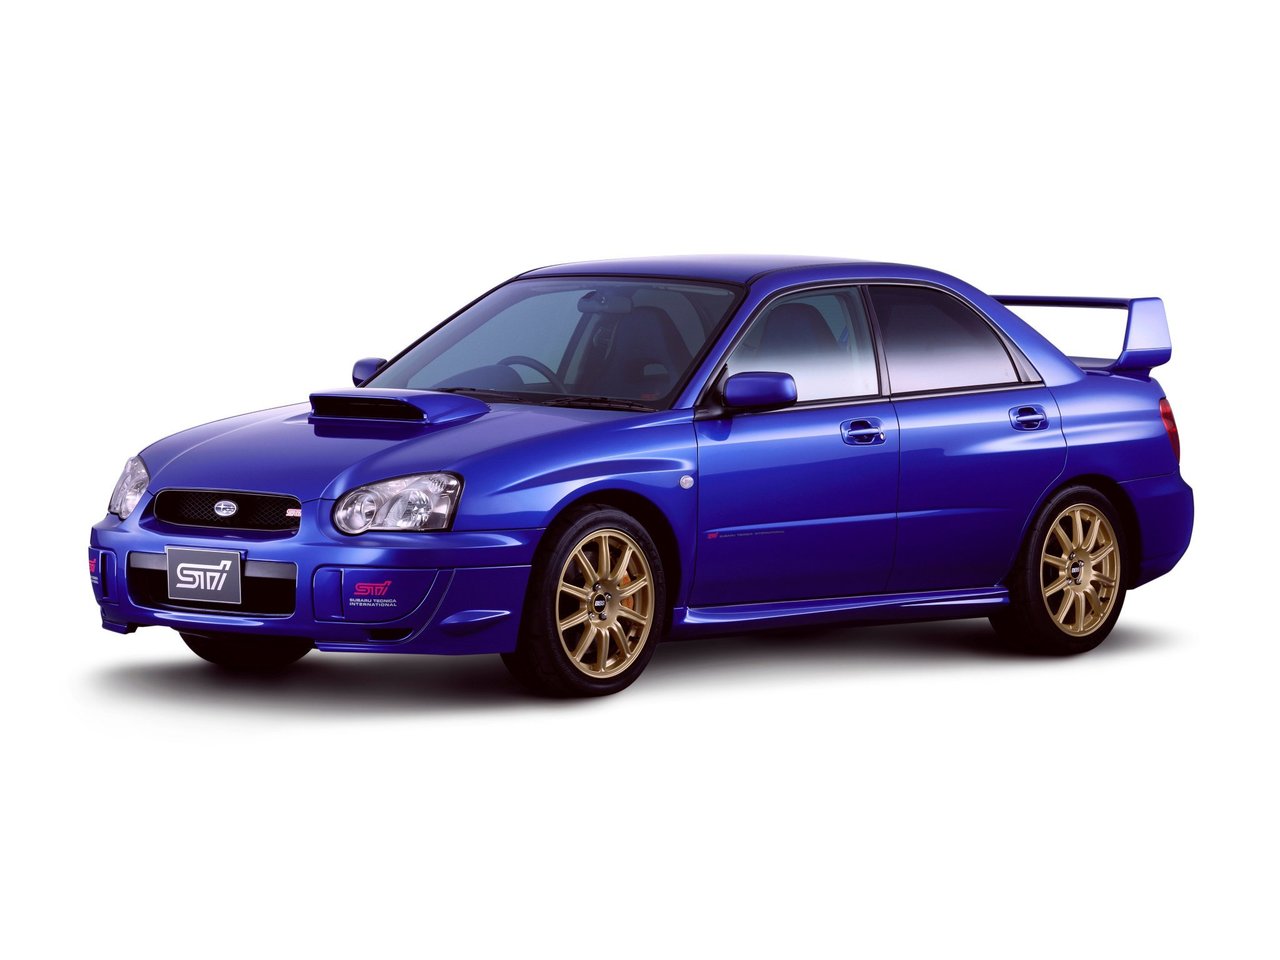 Расход газа двух комплектаций седана Subaru Impreza WRX STi. Разница стоимости заправки газом и бензином. Автономный пробег до и после установки ГБО.